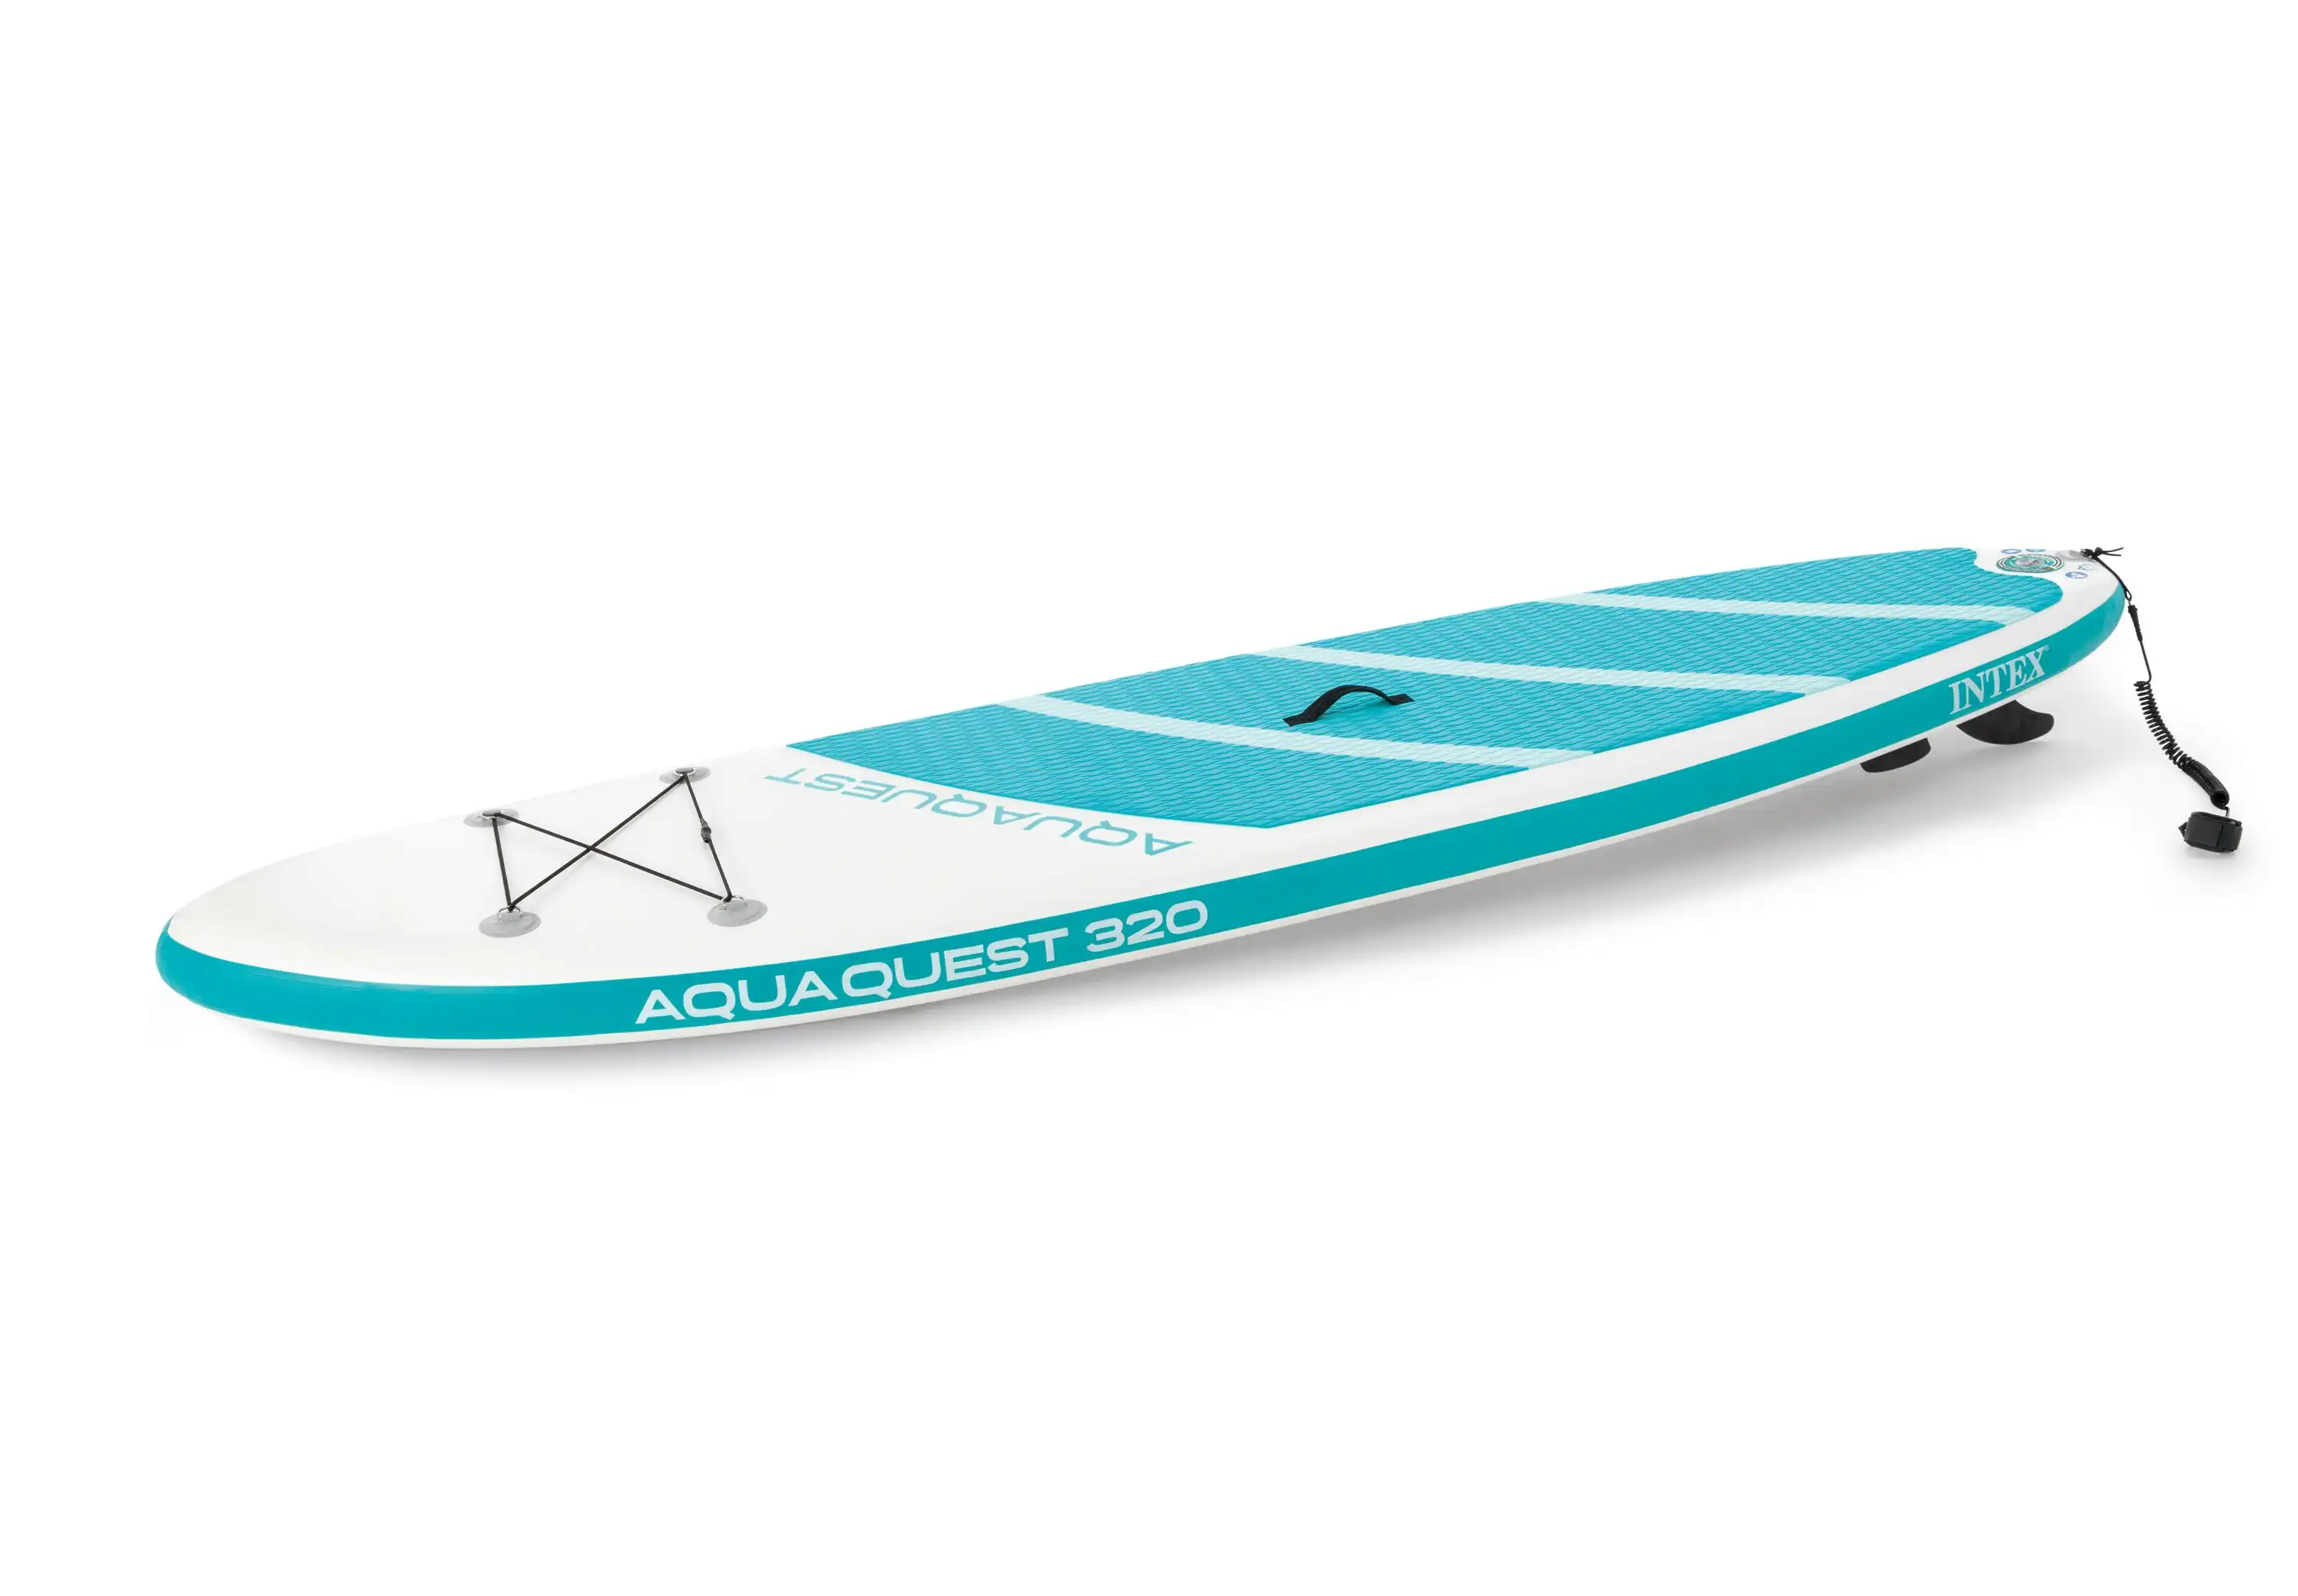 Aqua Quest 320 Stand Up Paddle Board 320cm 68242